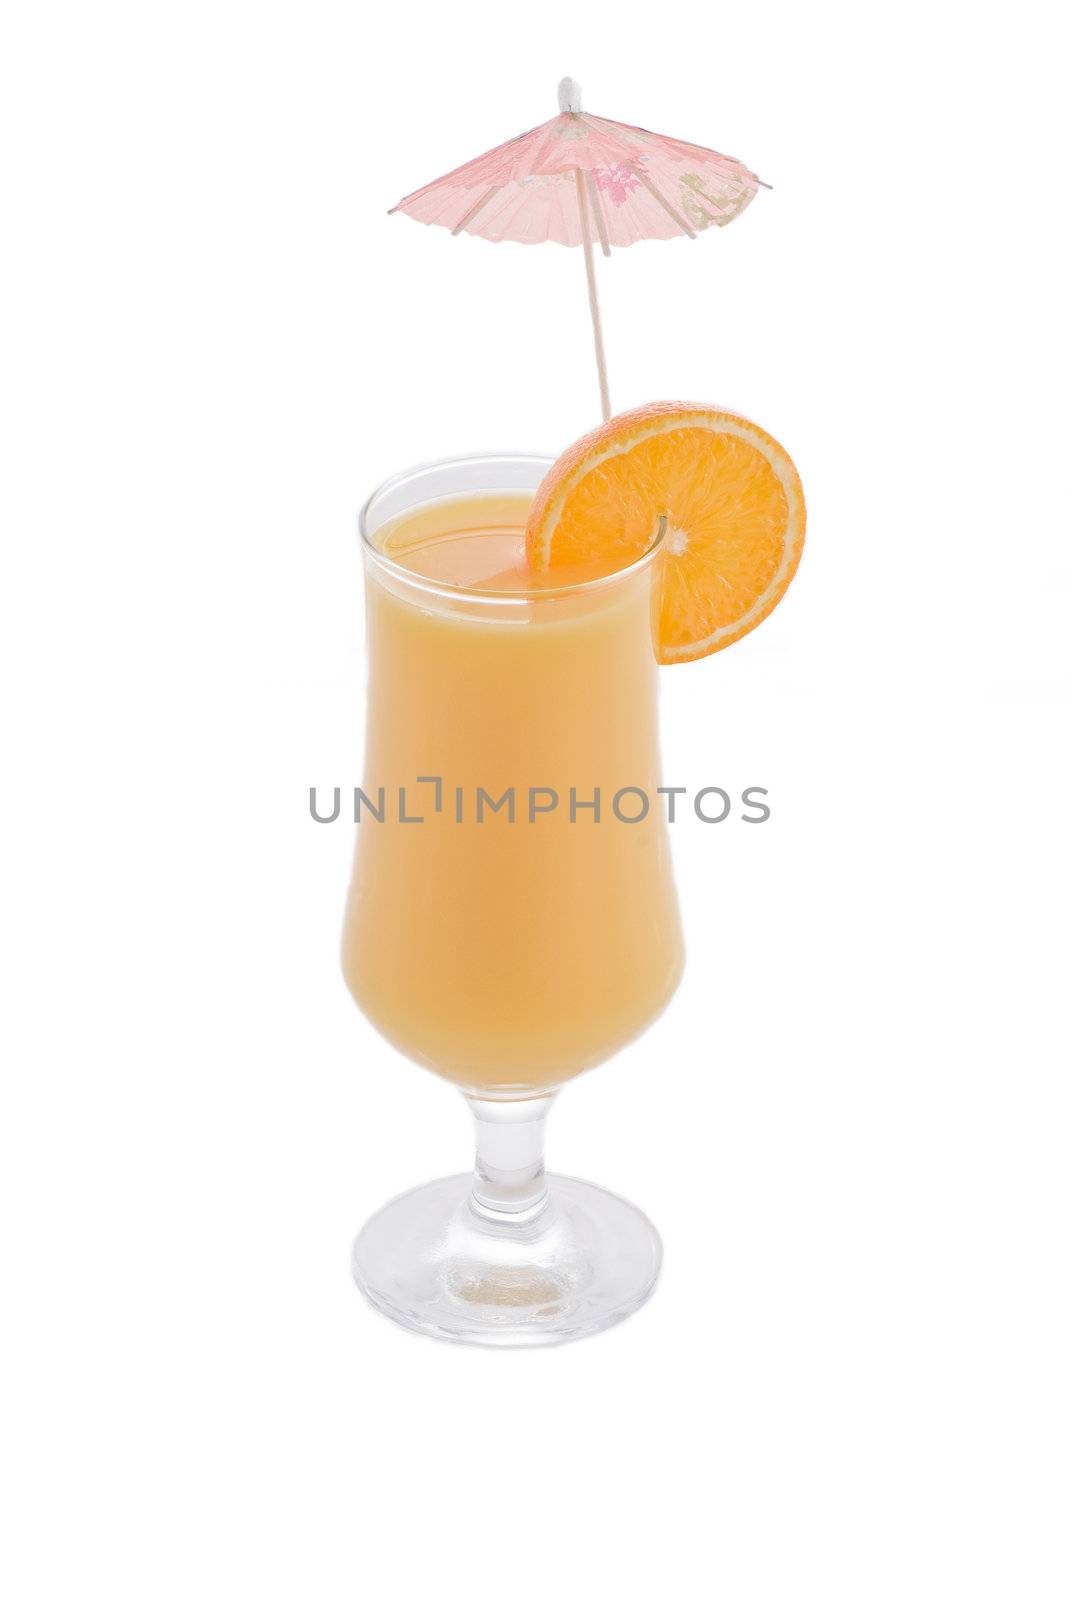 Glass of orange juice with slice of orange and drink umbrella